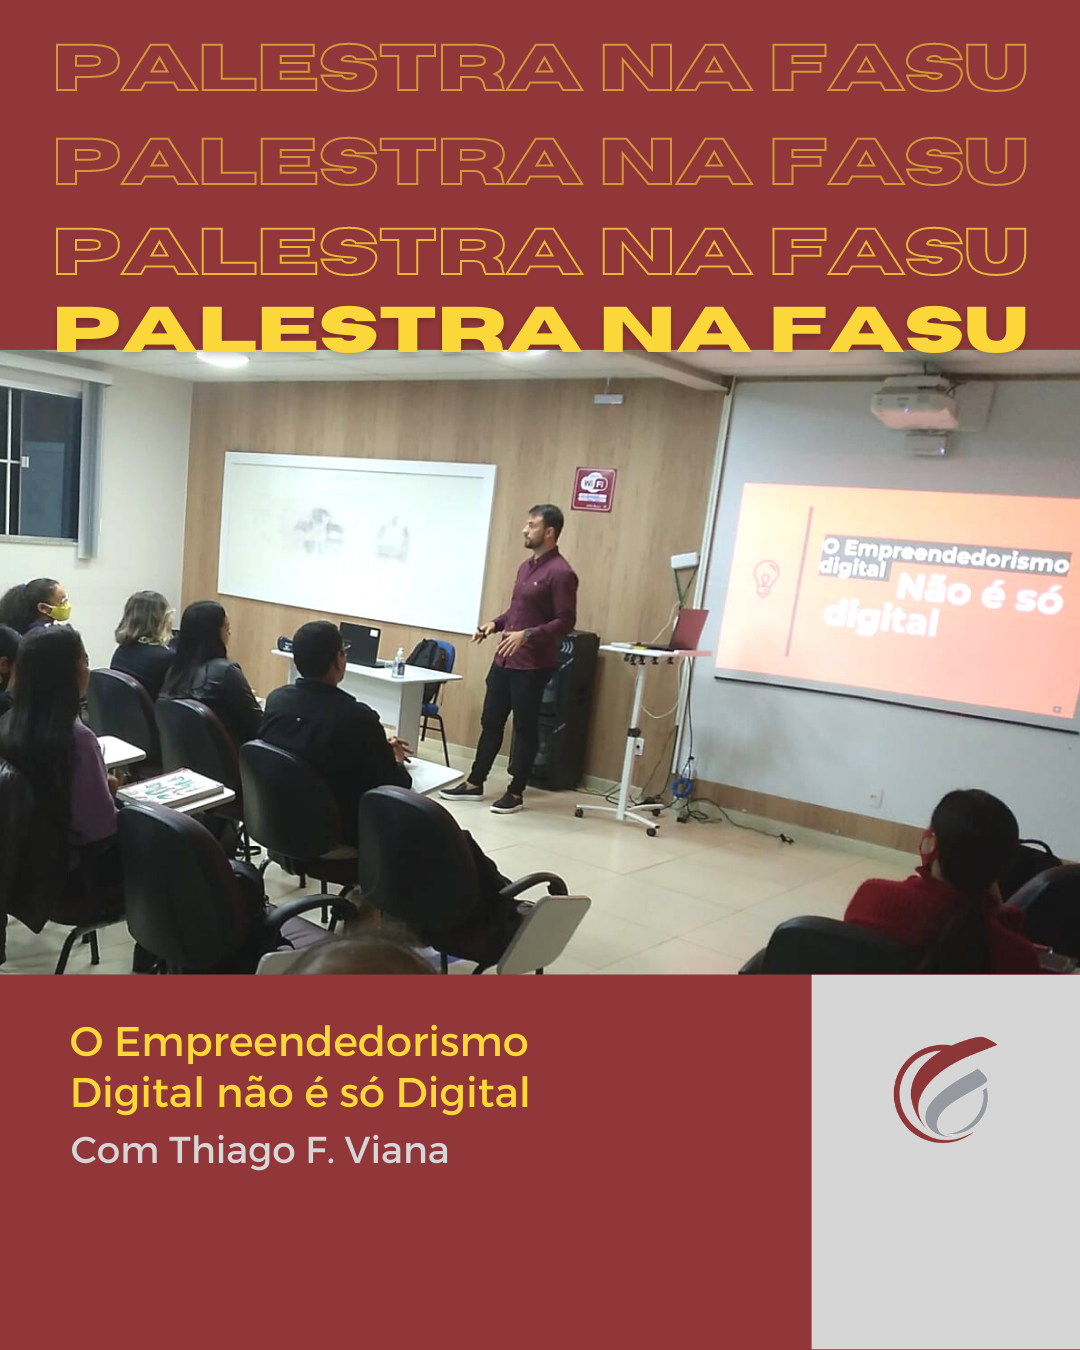 Palestra sobre empreendedorismo digital na FASU